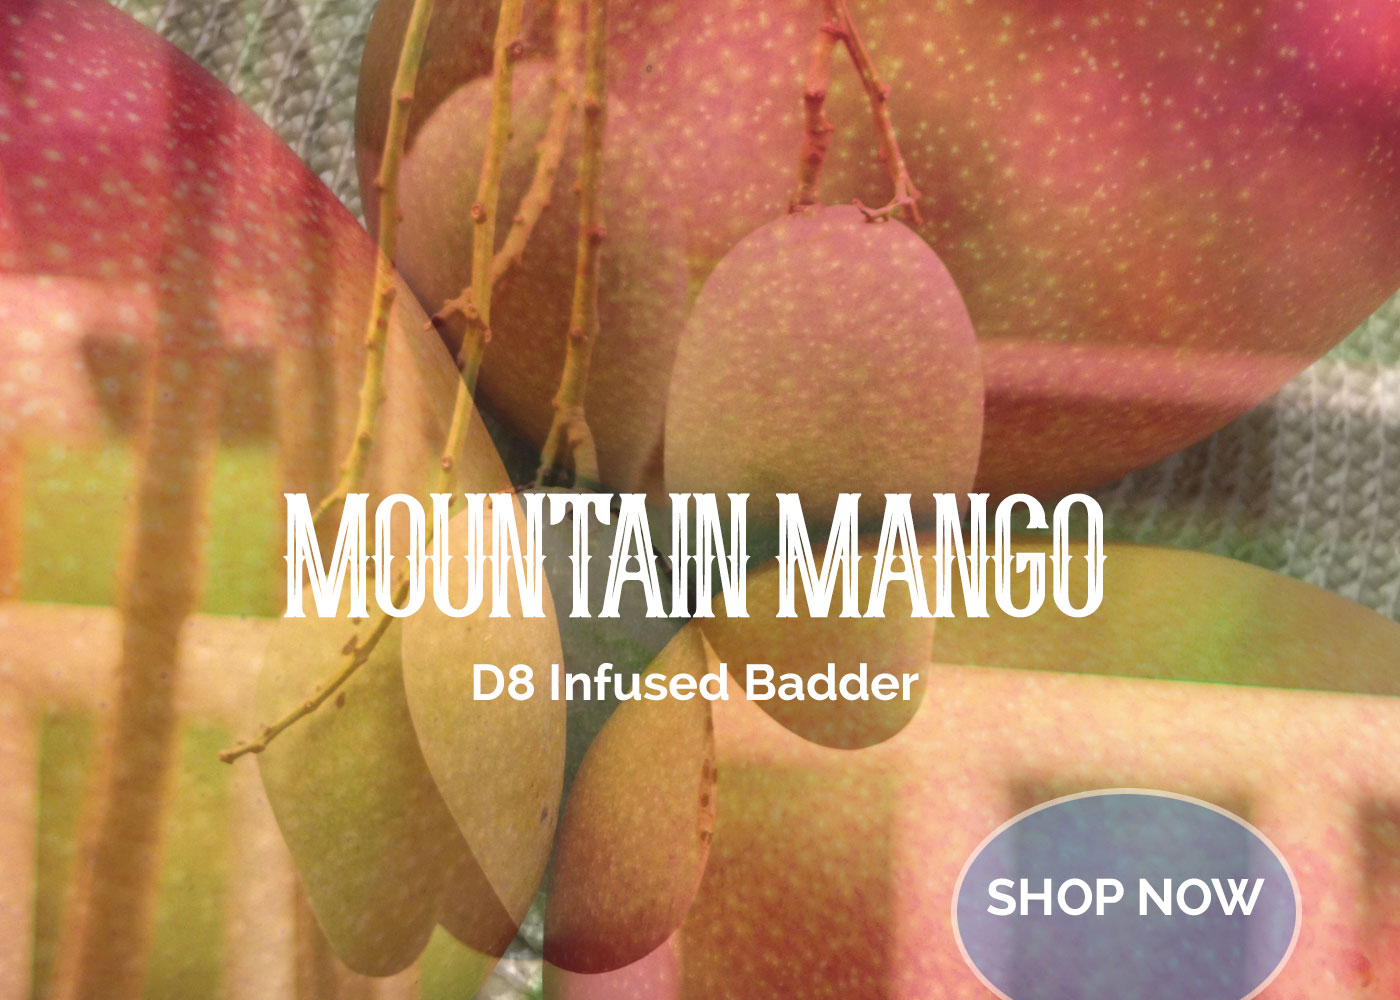 Mountain Mango D8 Infused Badder Mango Flavor For Sale